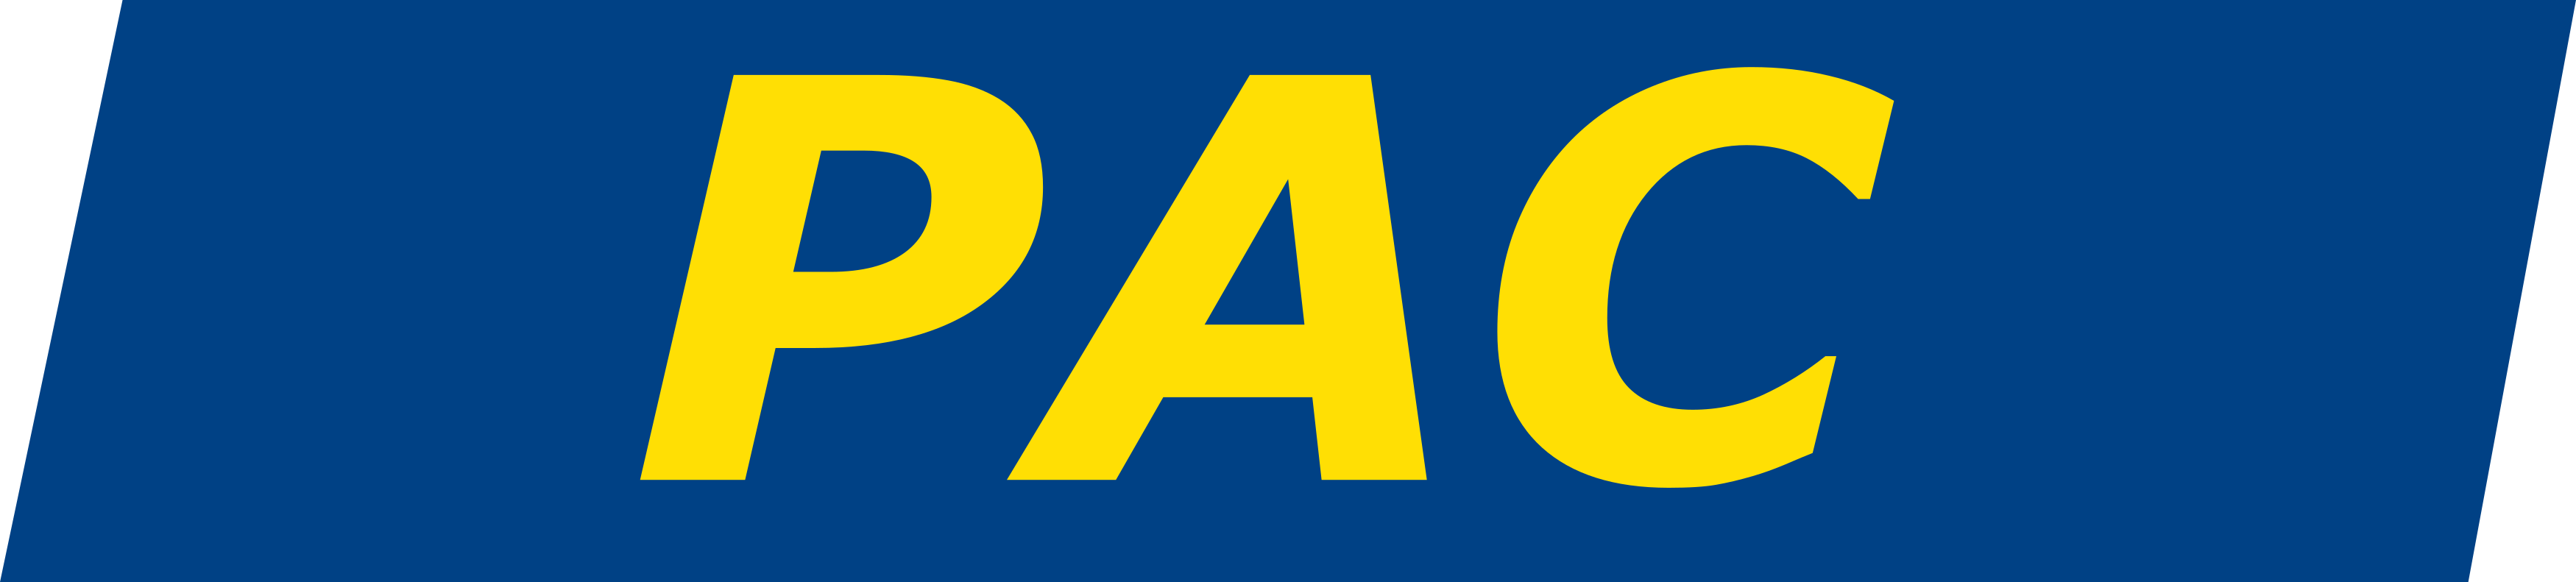 pac correios logo 1 - PAC Correios Logo